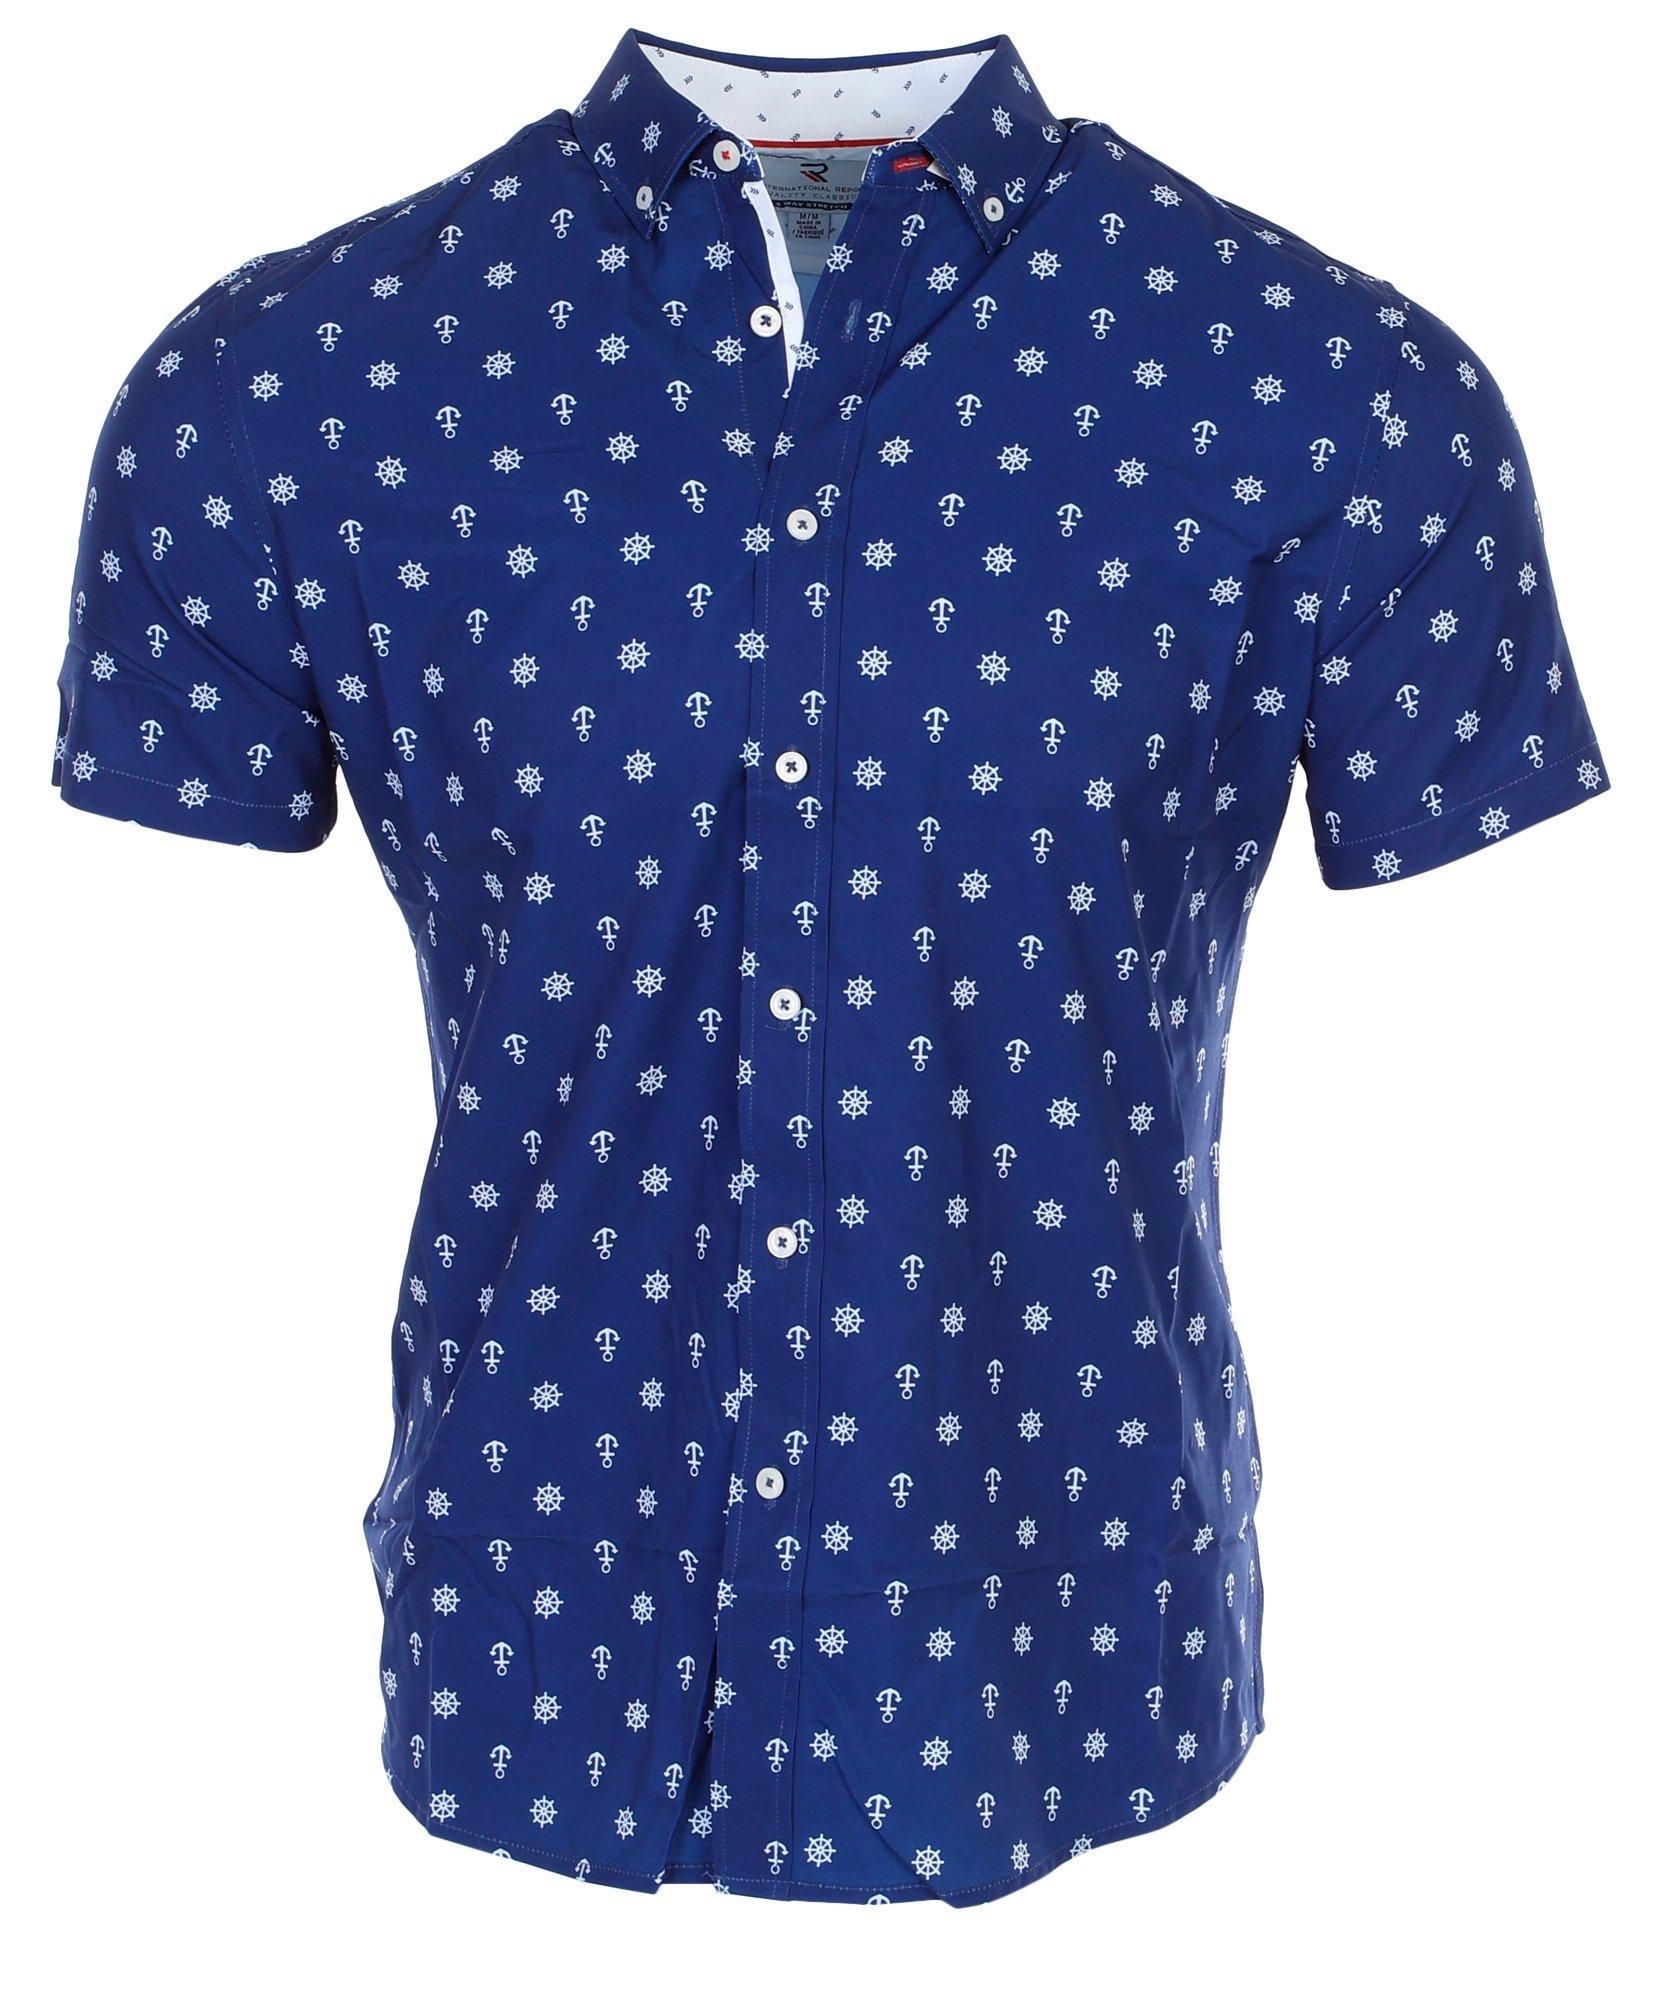 Men's Nautical Anchor Print Button Down Shirt